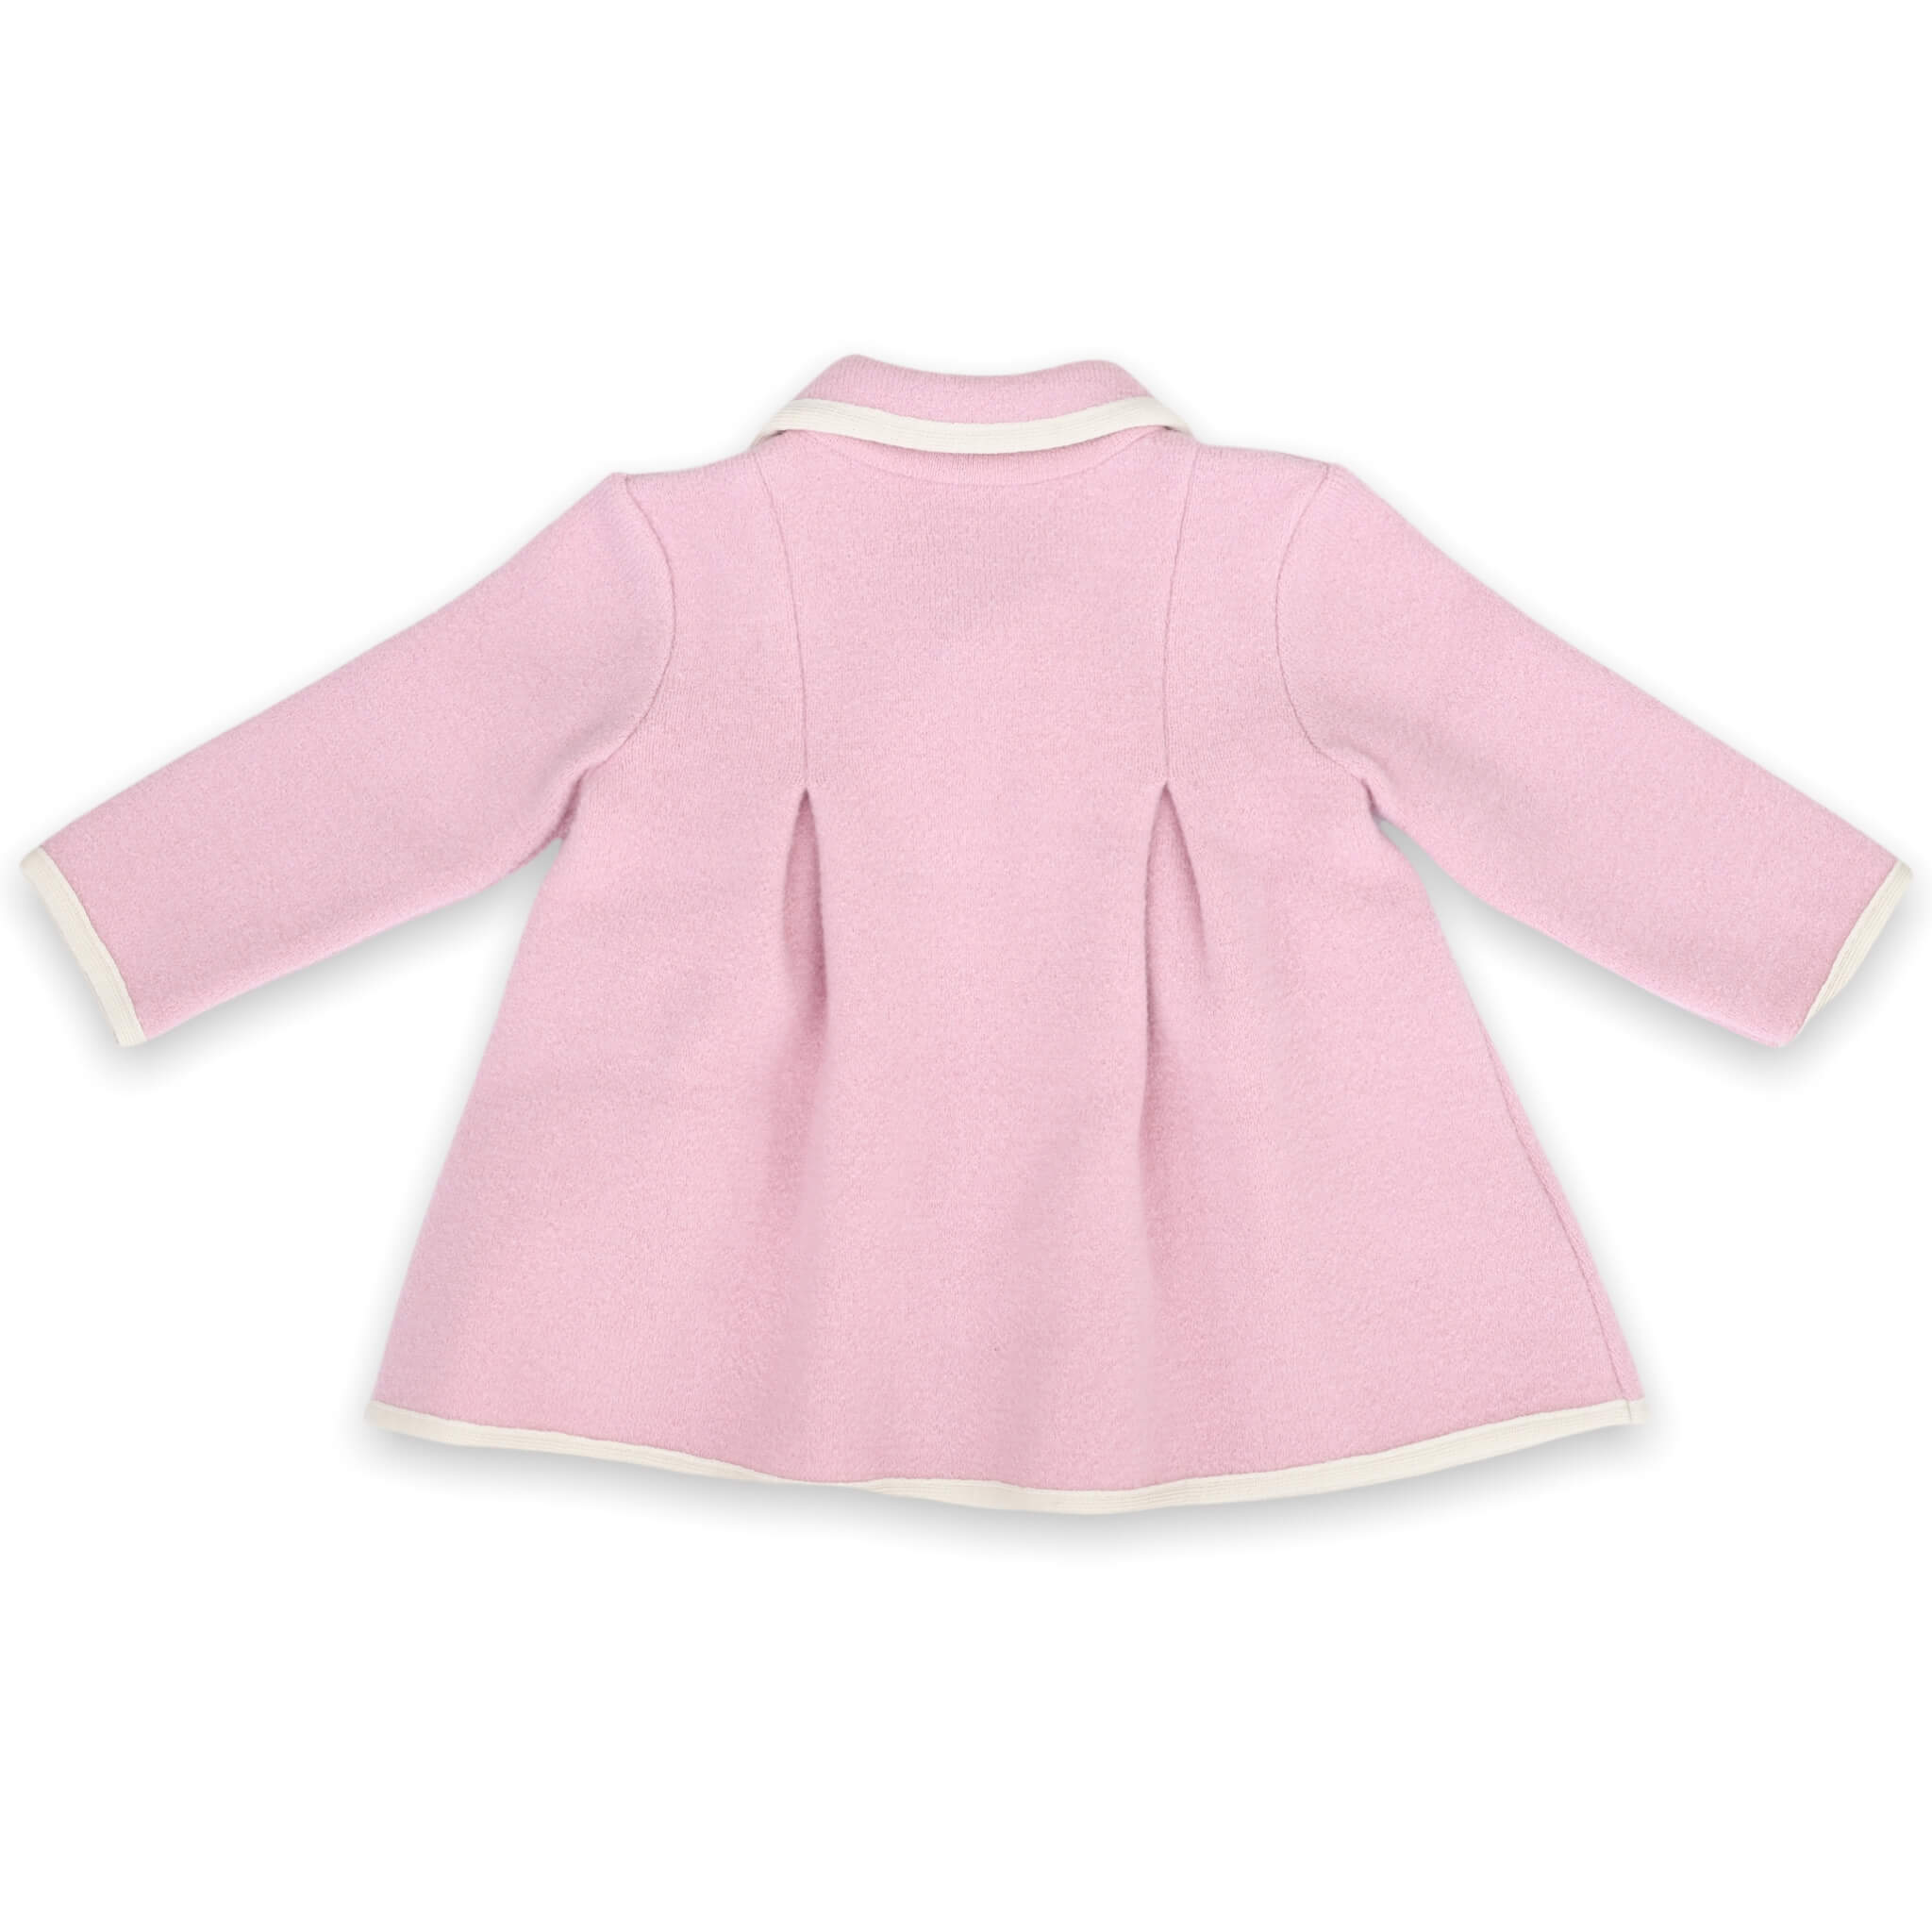 bakc of marae pink girls coat 100% wool